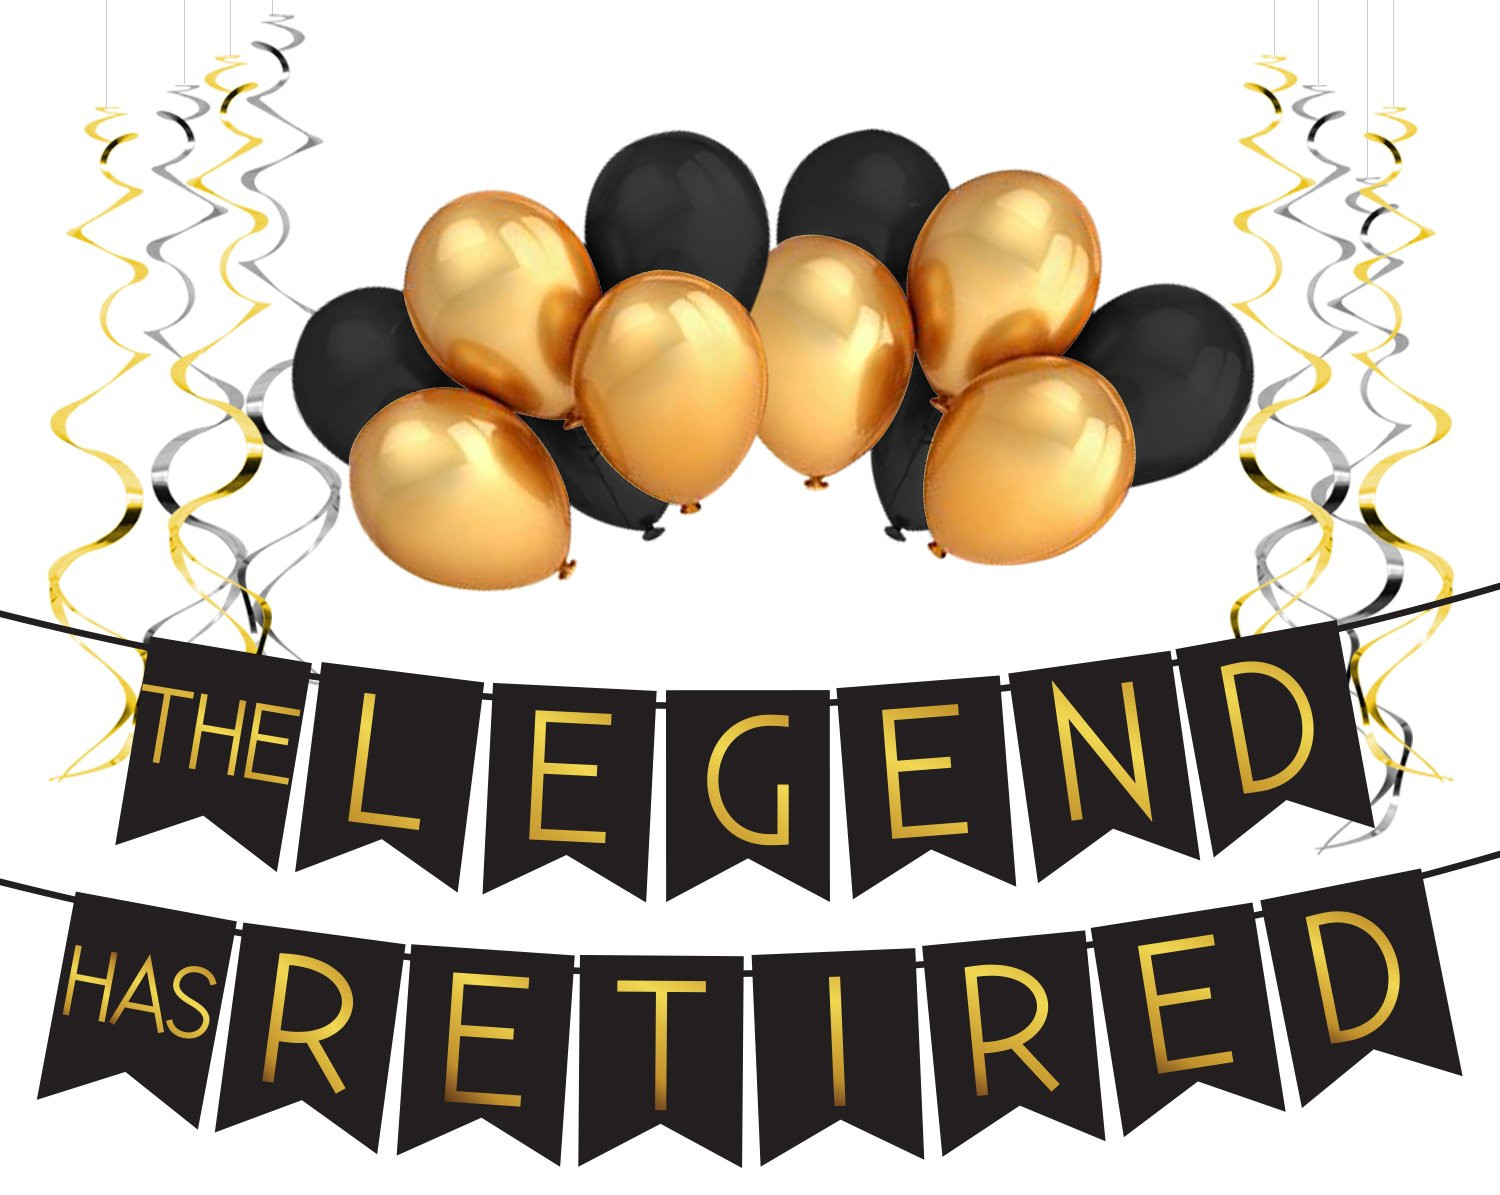 Retirement Party Decorating Ideas
 Amazon "The Legend Has Retired" Hat Retirement